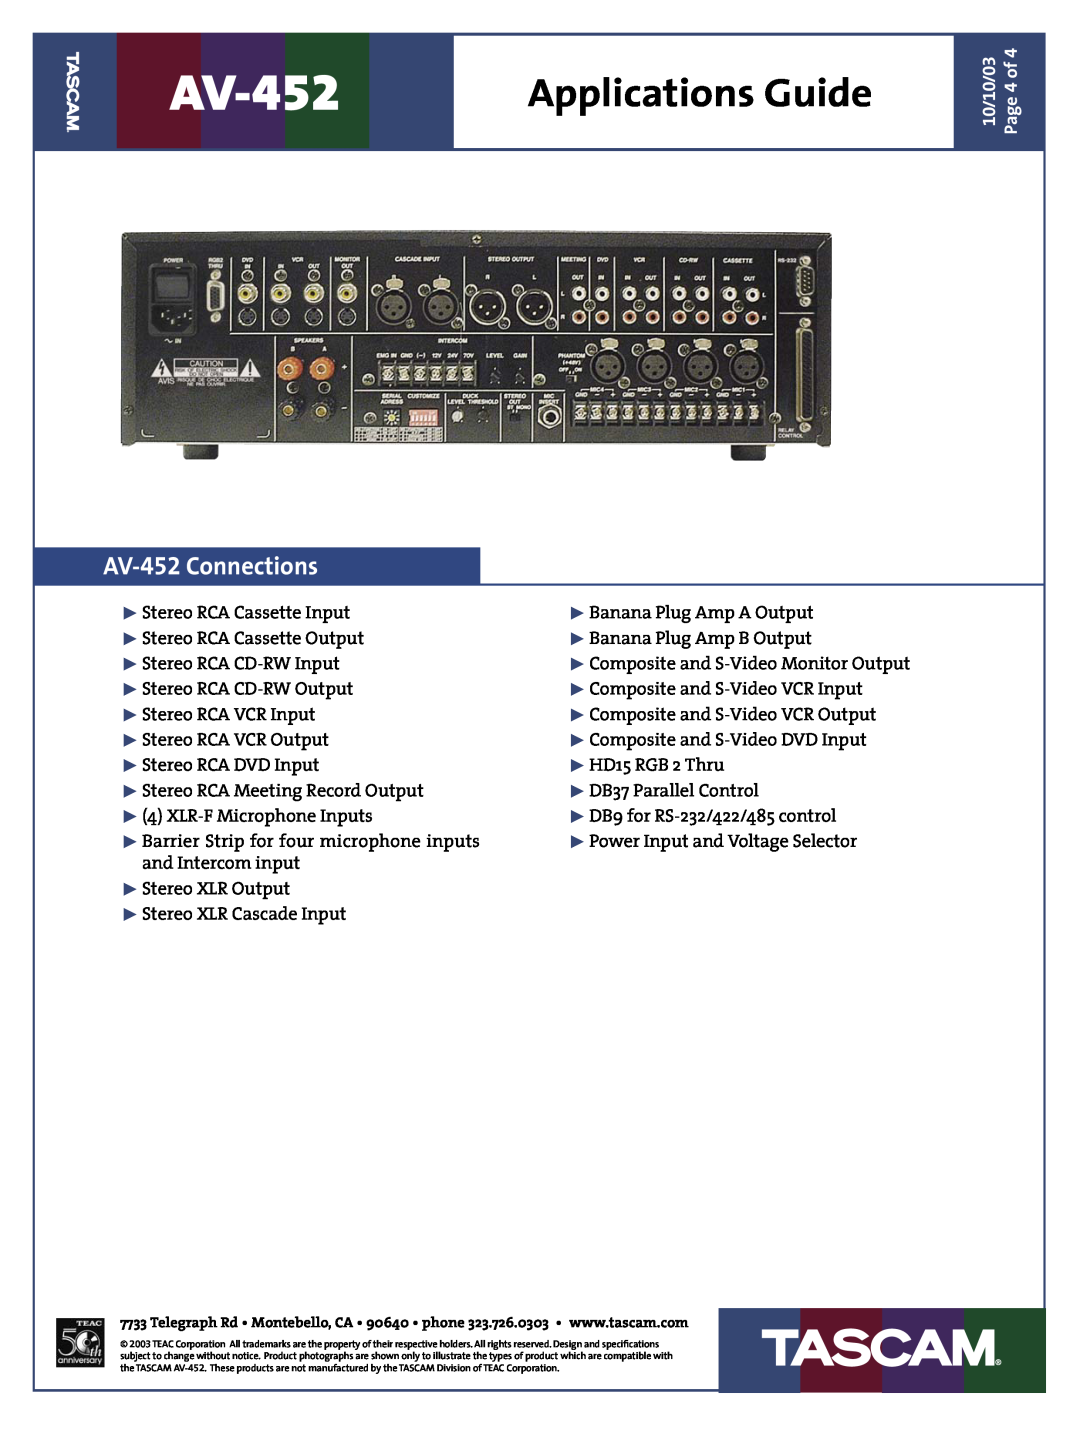 Tascam manual AV-452Connections, Applications Guide 